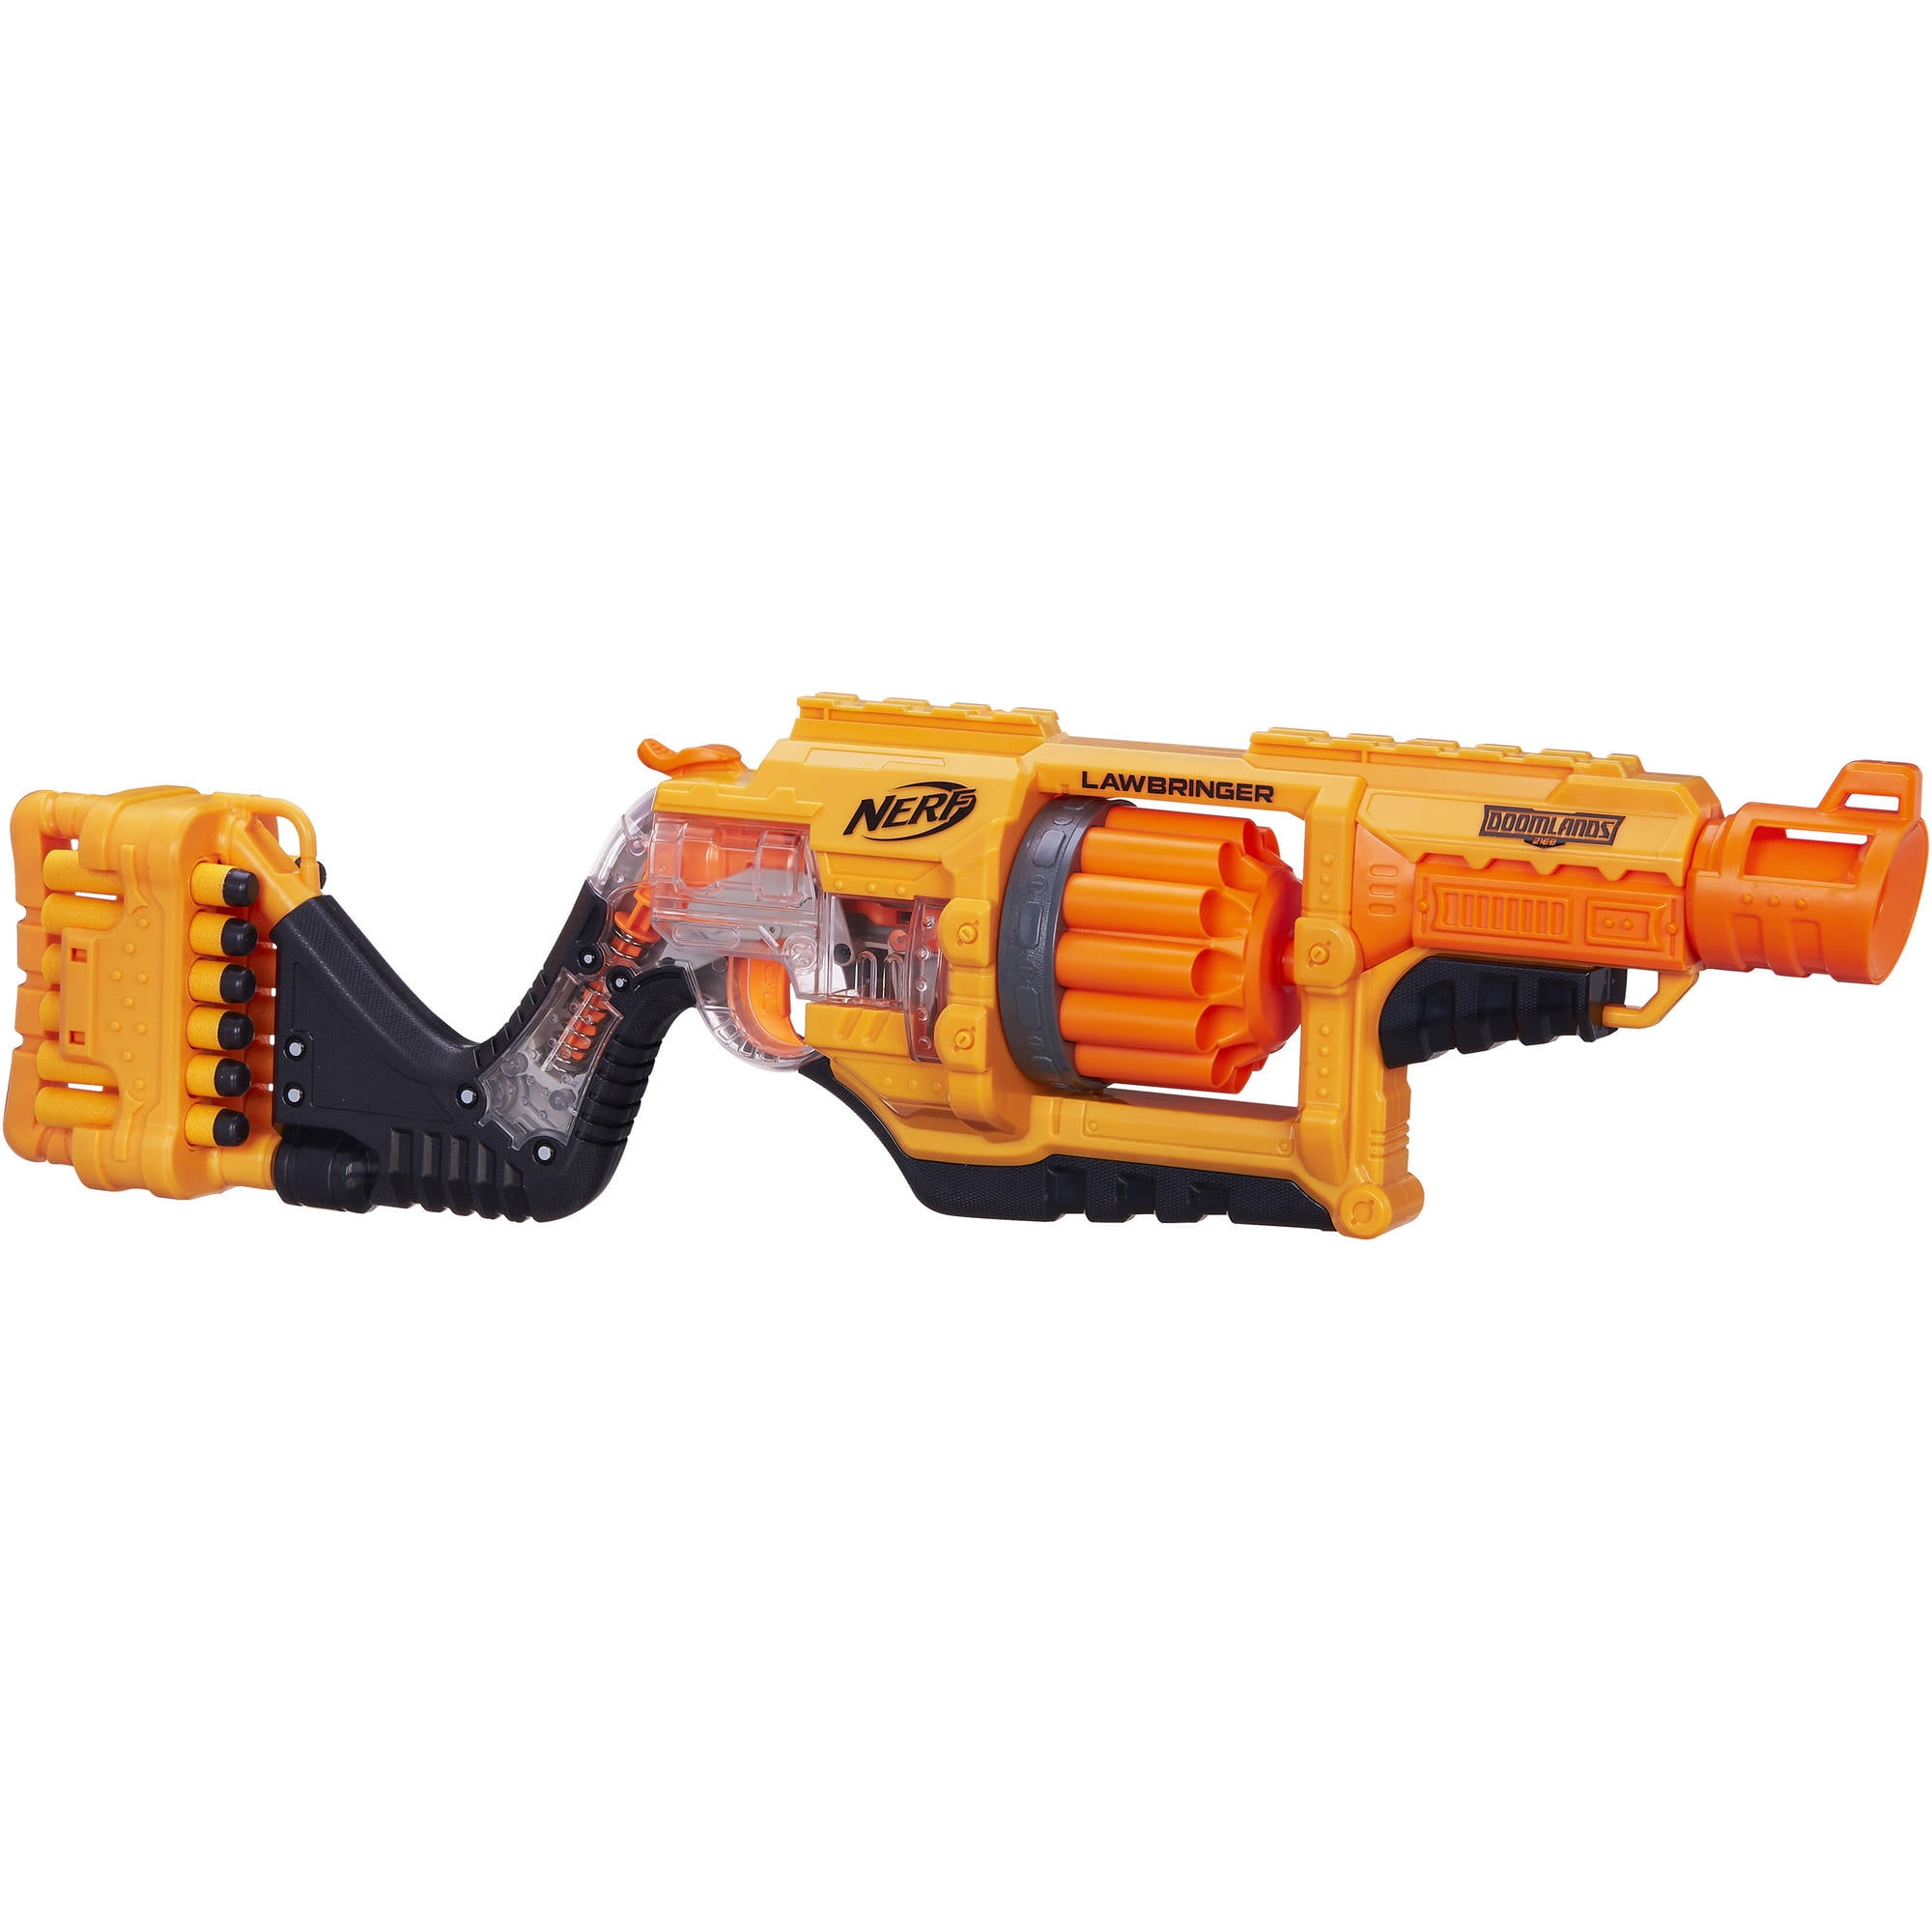 Nerf Doomlands Persuader Blaster Kids Action Toy Gun Outdoor Game Christmas Gift 